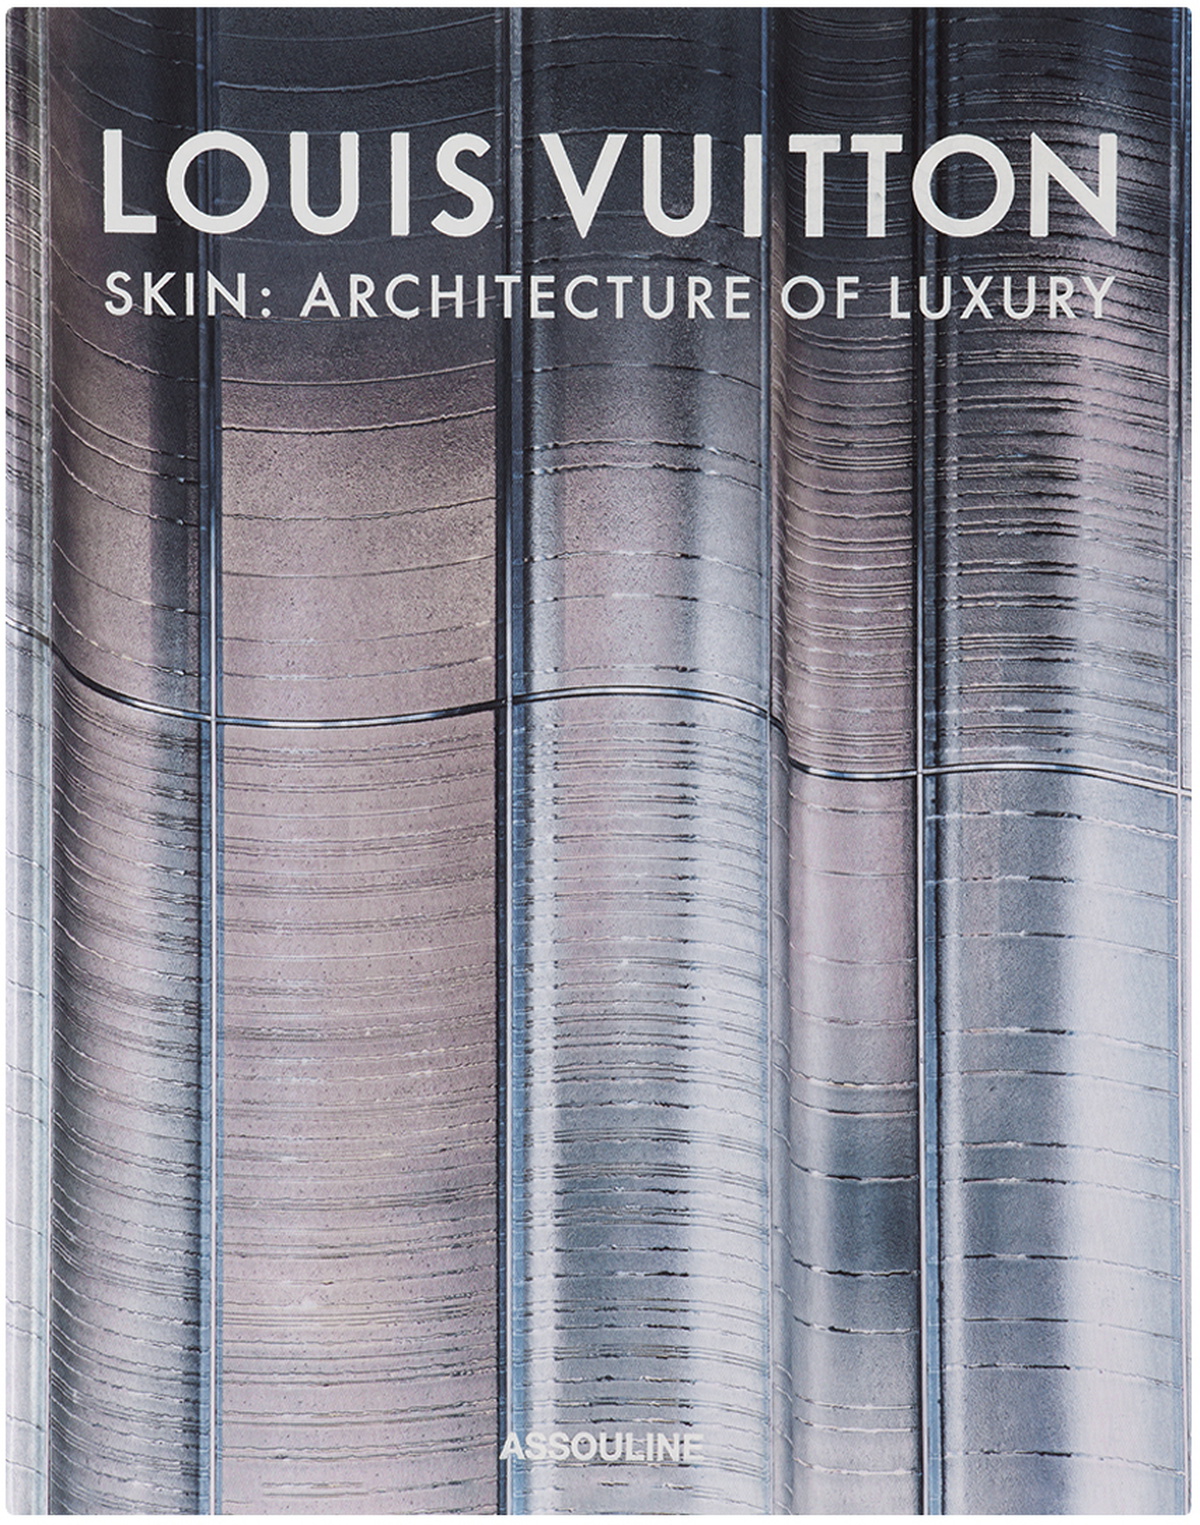 Assouline L.Vuitton Skin Architecture Of Luxury (Seoul) Book